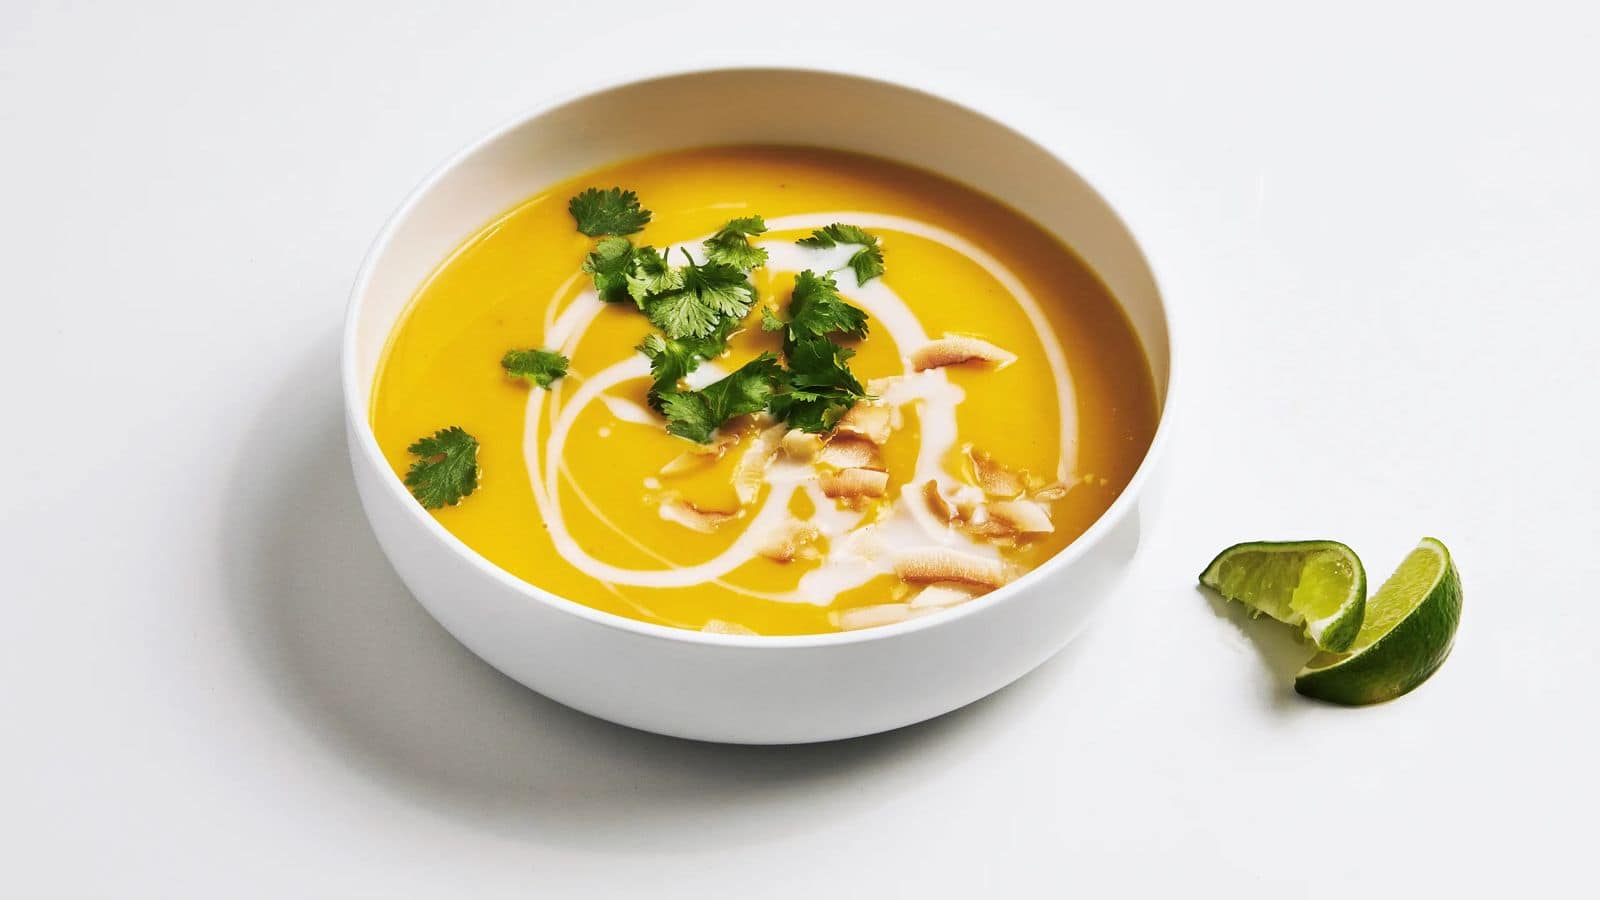 It's recipe time! Prepare this wholesome squash soup